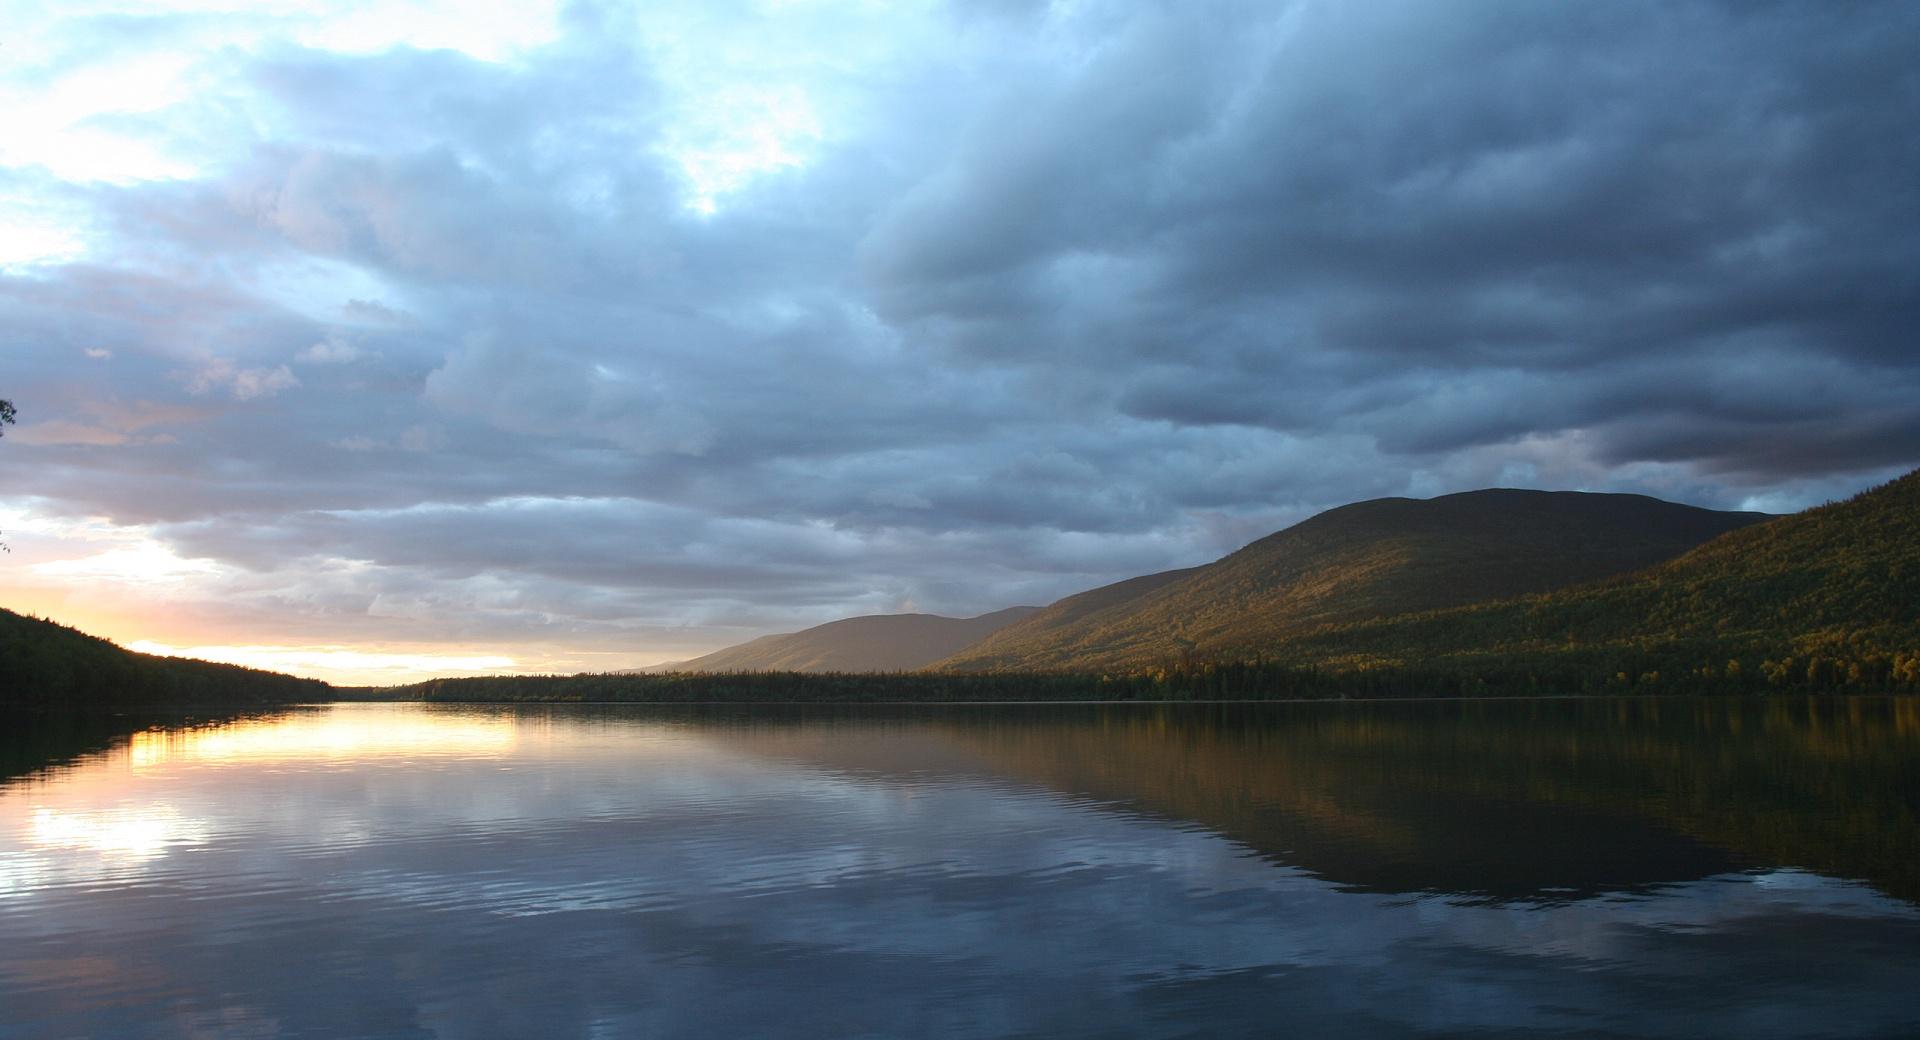 Morfee Lake, Mackenzie, British Columbia, Canada at 1280 x 960 size wallpapers HD quality